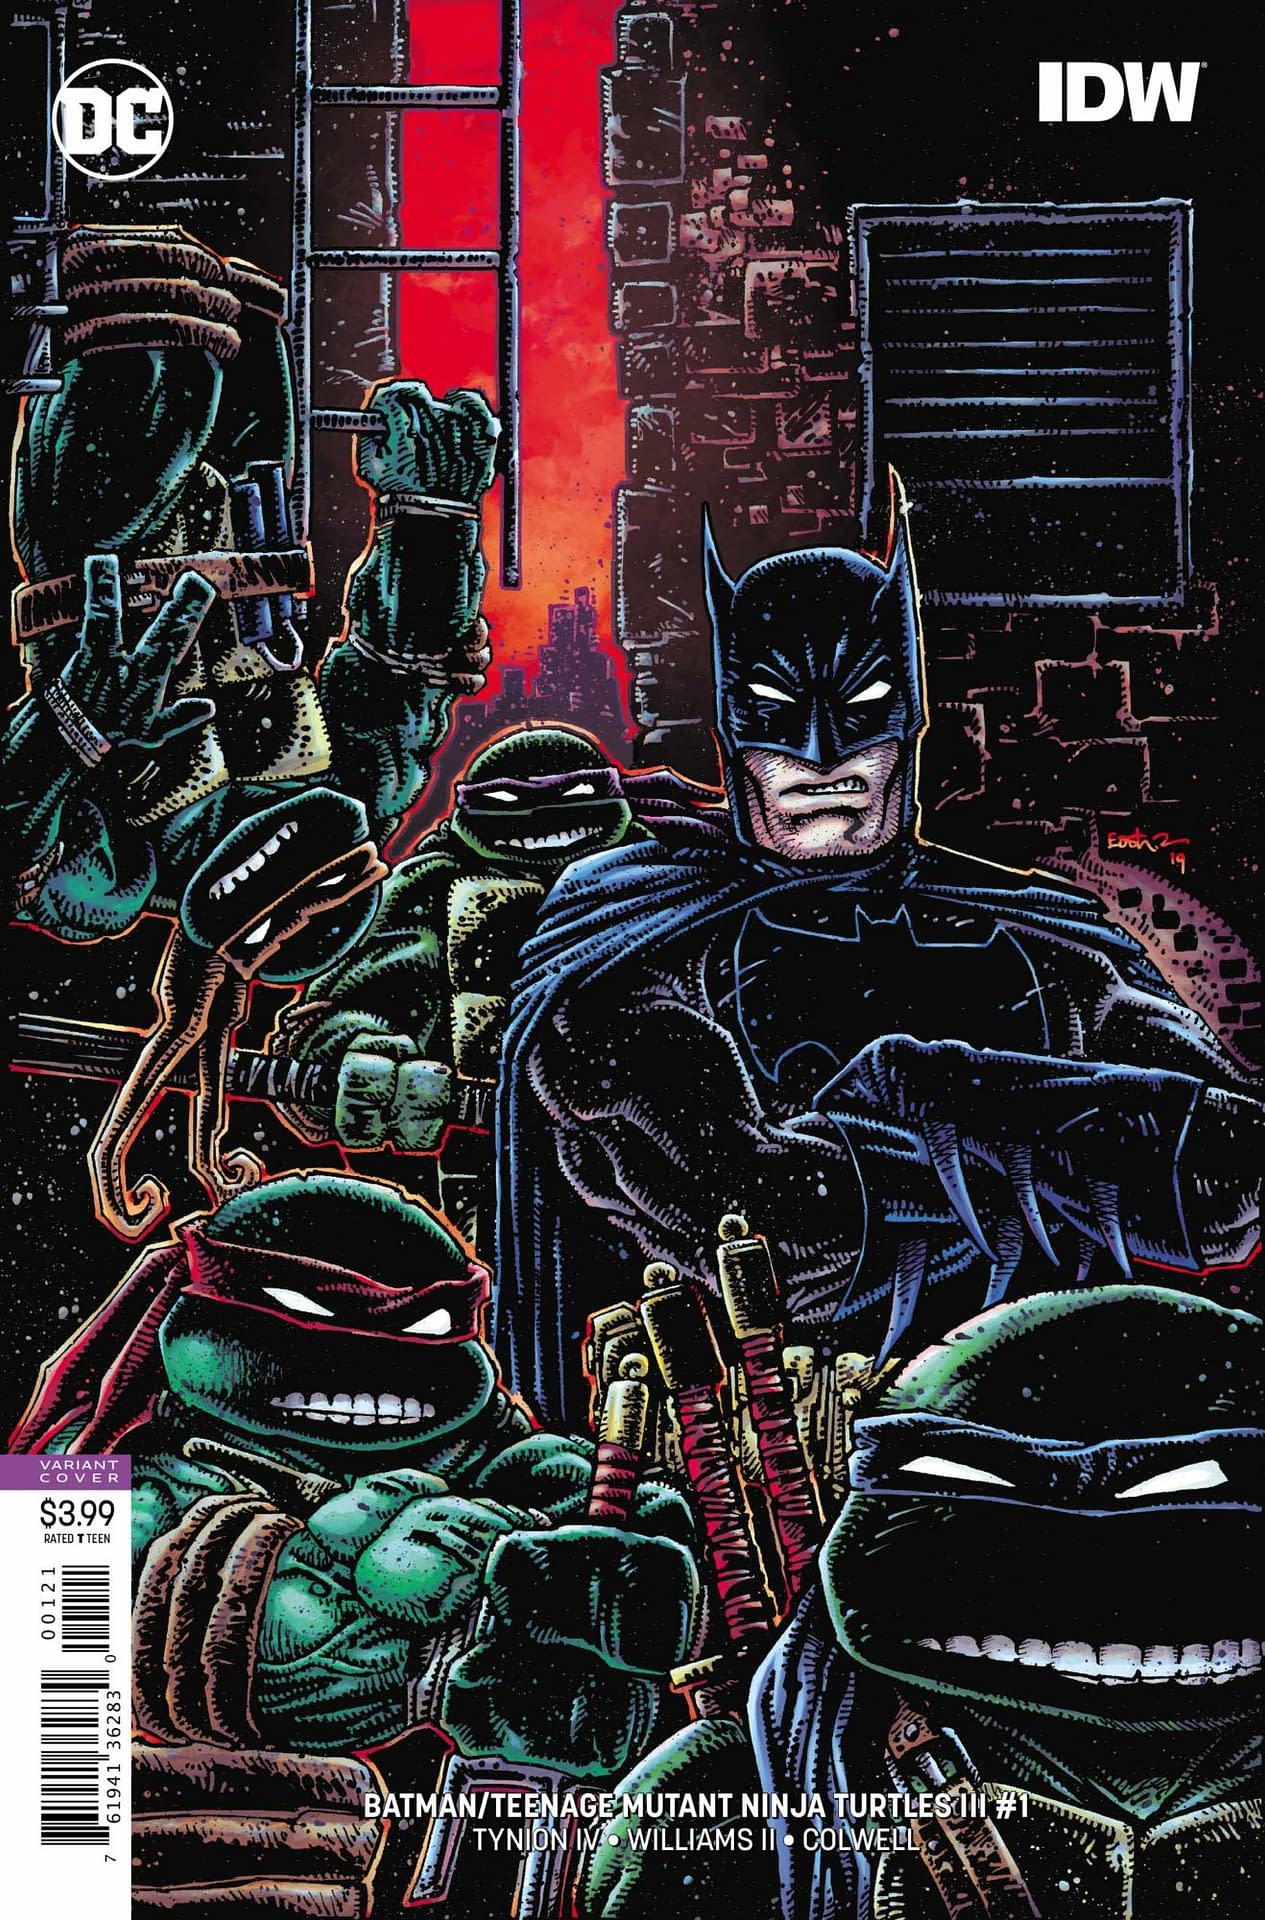 Shredder and Joker Get Infinity Warped in Batman/TMNT 3 #1 Preview